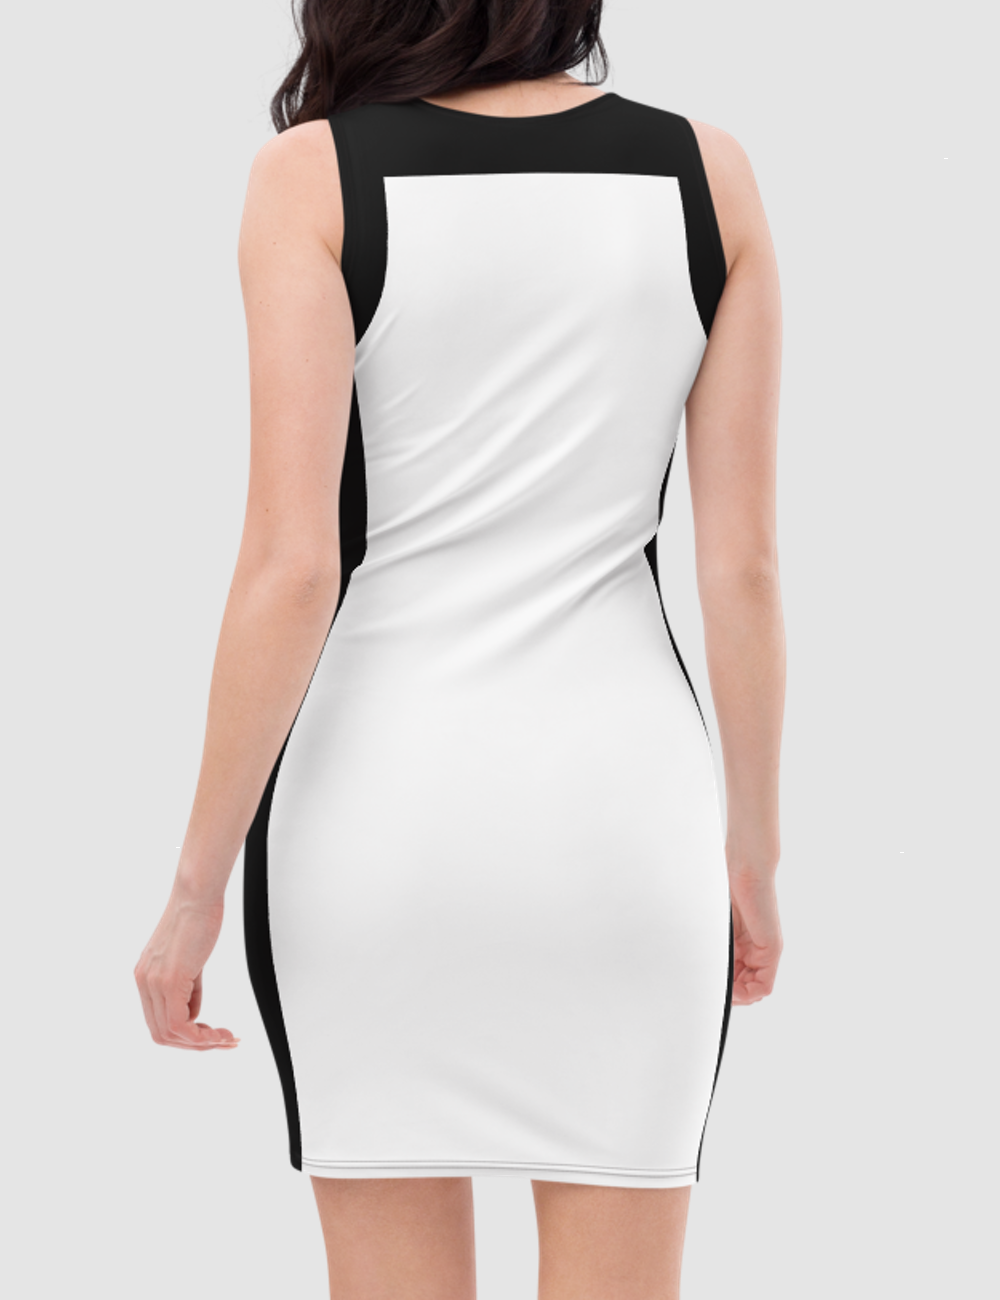 White Widow | Women's Sleeveless Fitted Sublimated Dress OniTakai